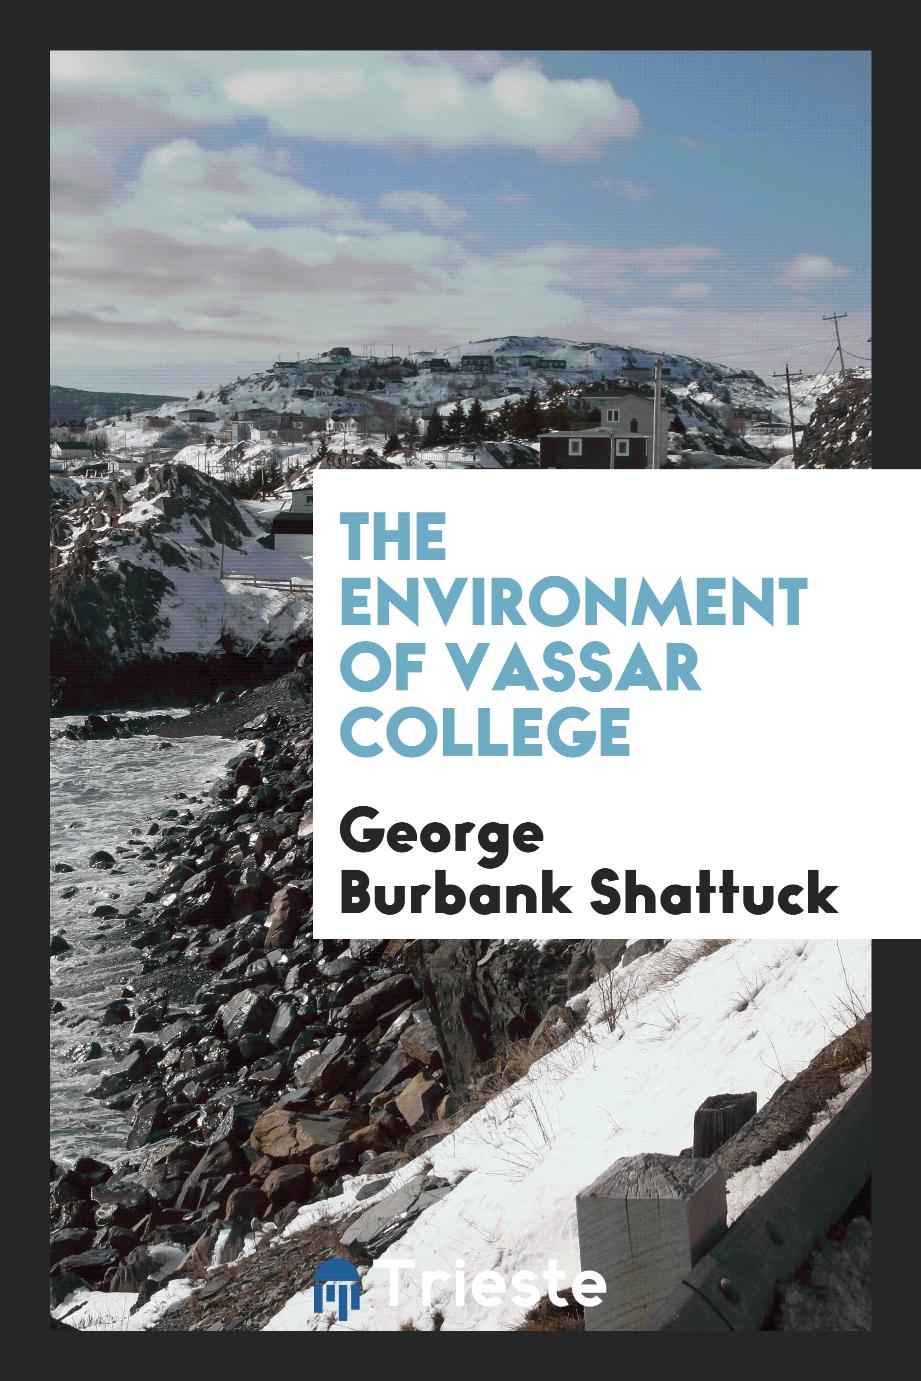 The environment of Vassar College